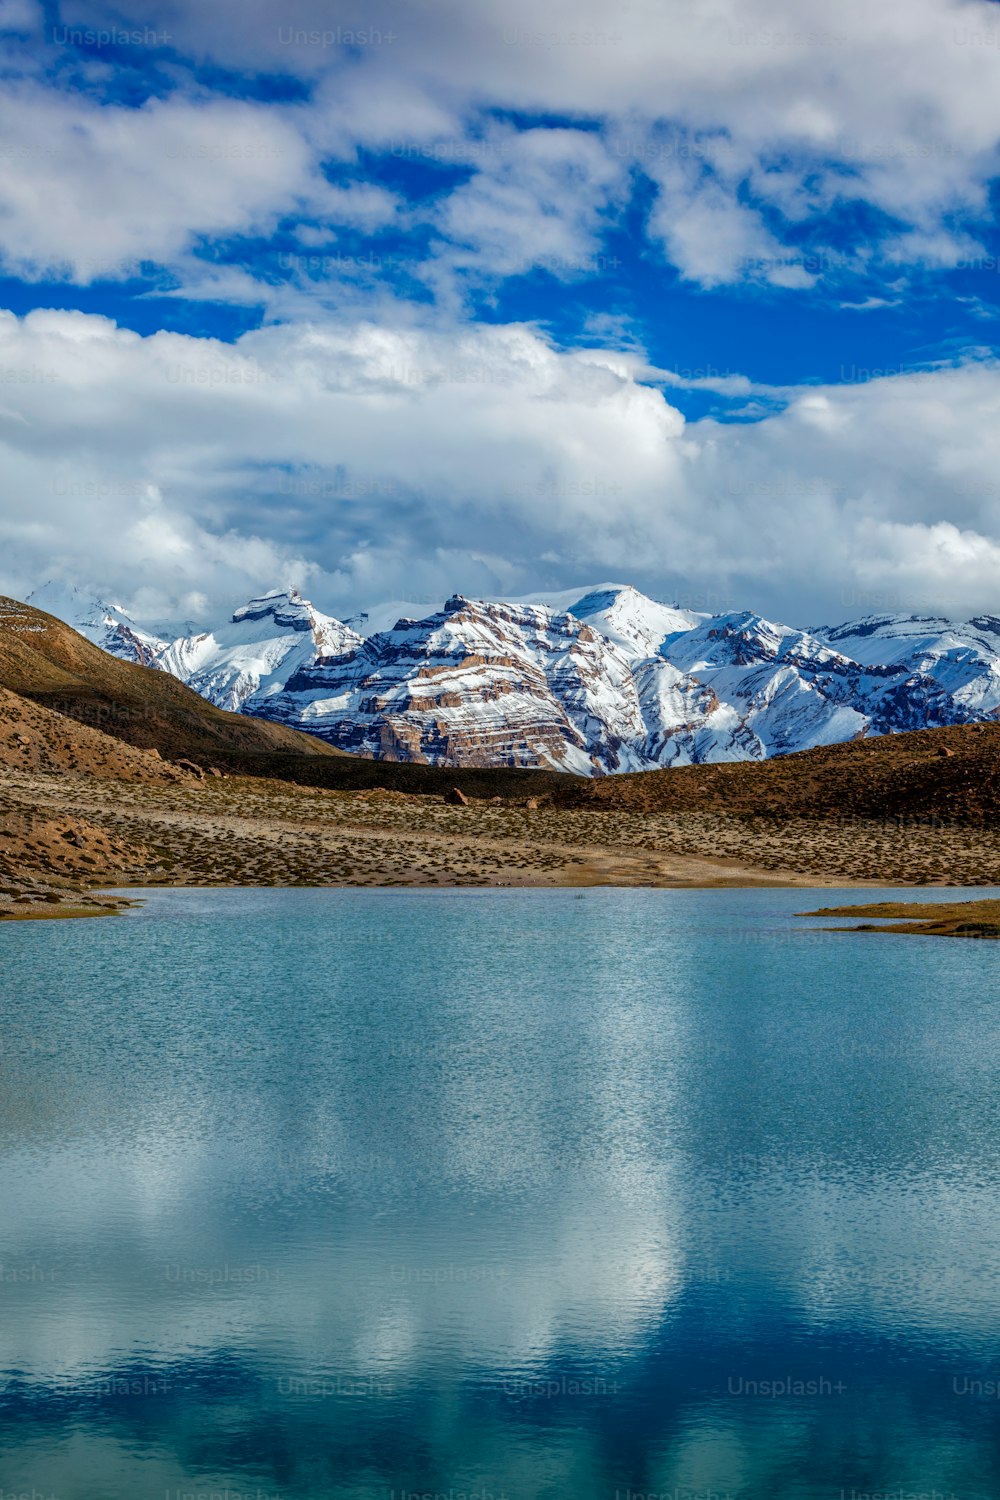 Dhankar lake in Himalayas. Spiti valley, Himachal Pradesh, India